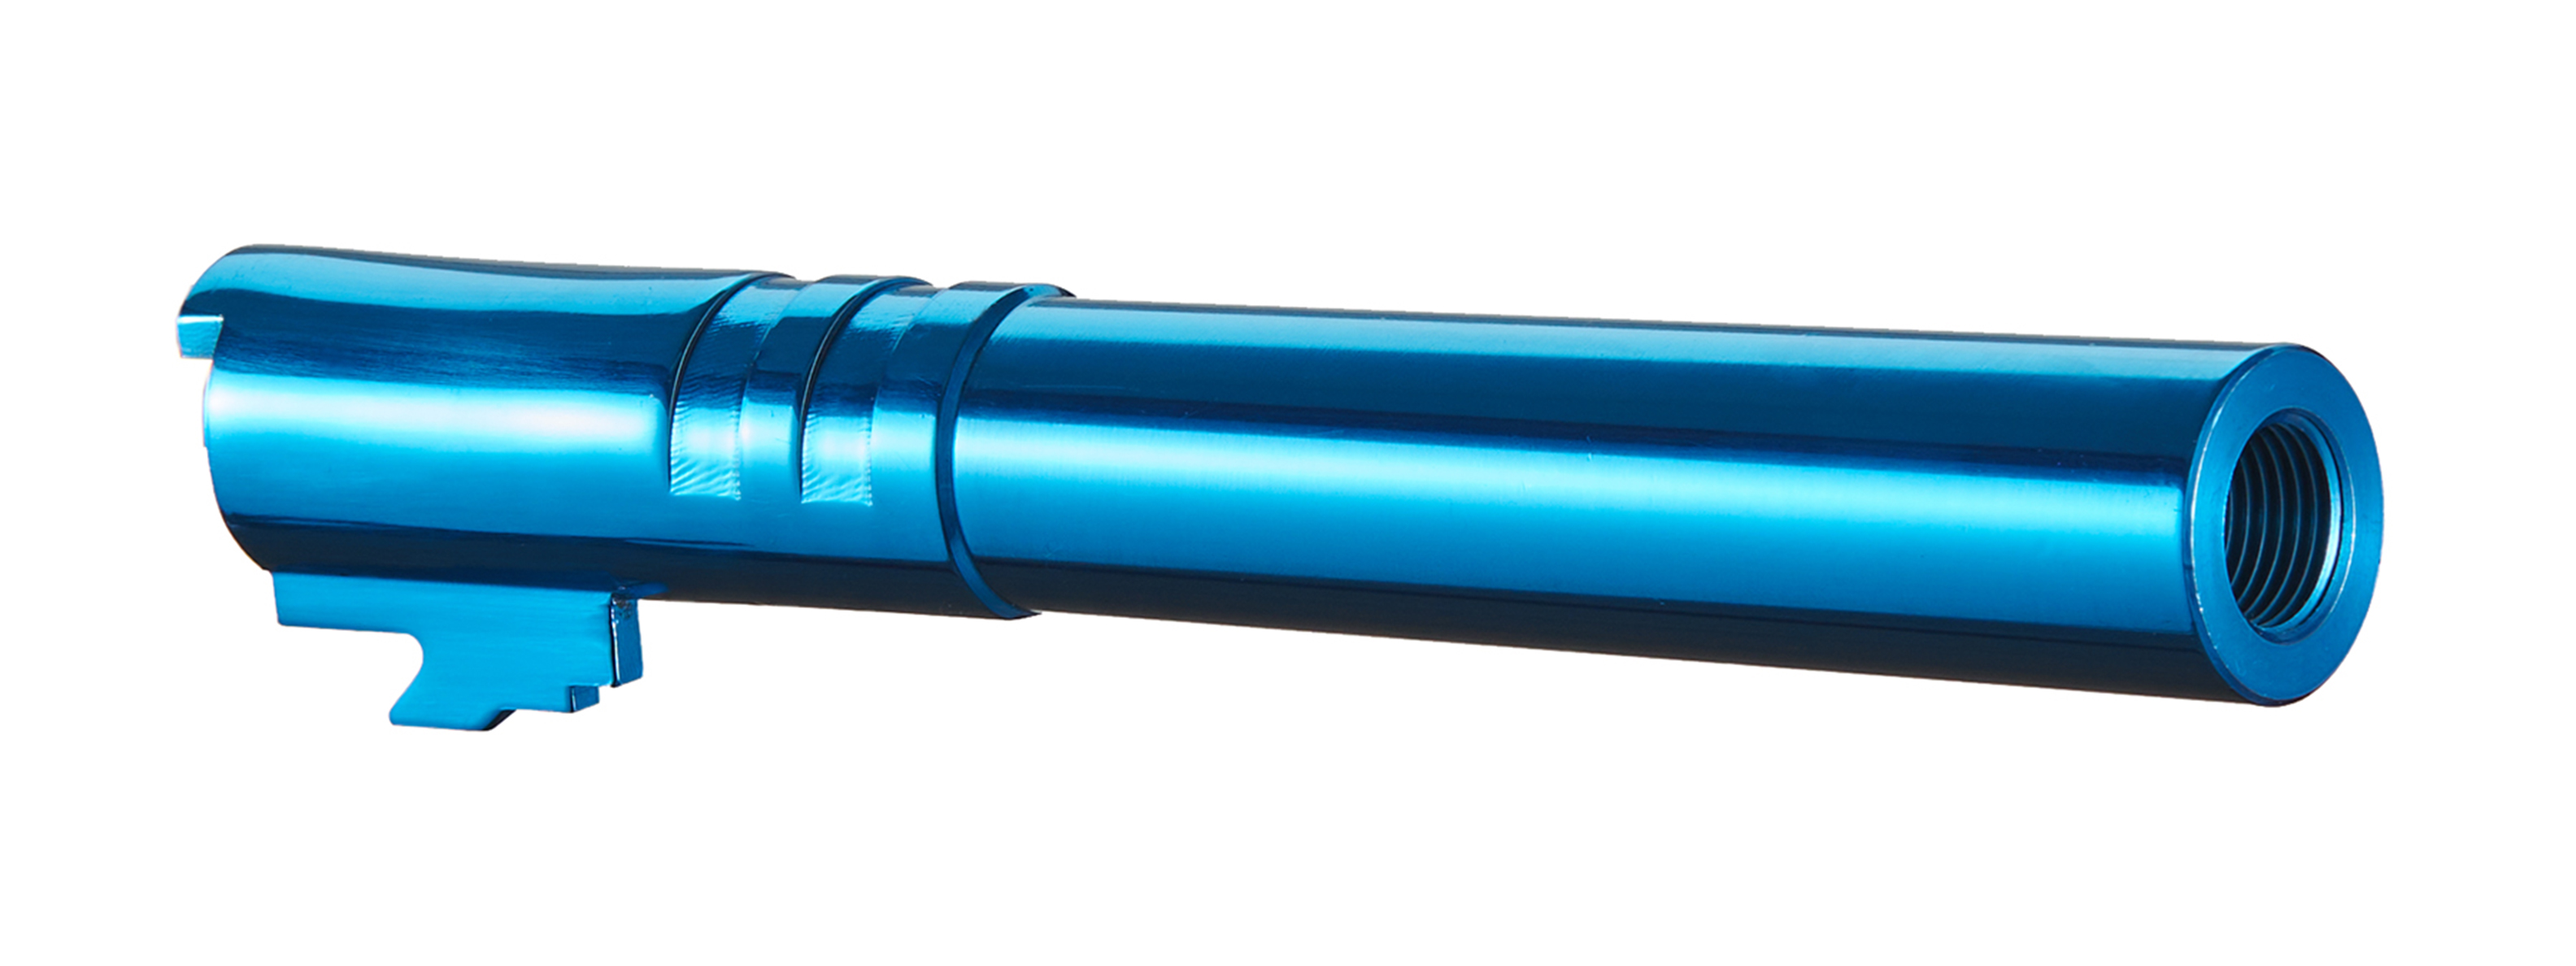 Lancer Tactical Stainless Steel Threaded Outer Barrel for 5.1 Hi-Capa Pistols (Blue)